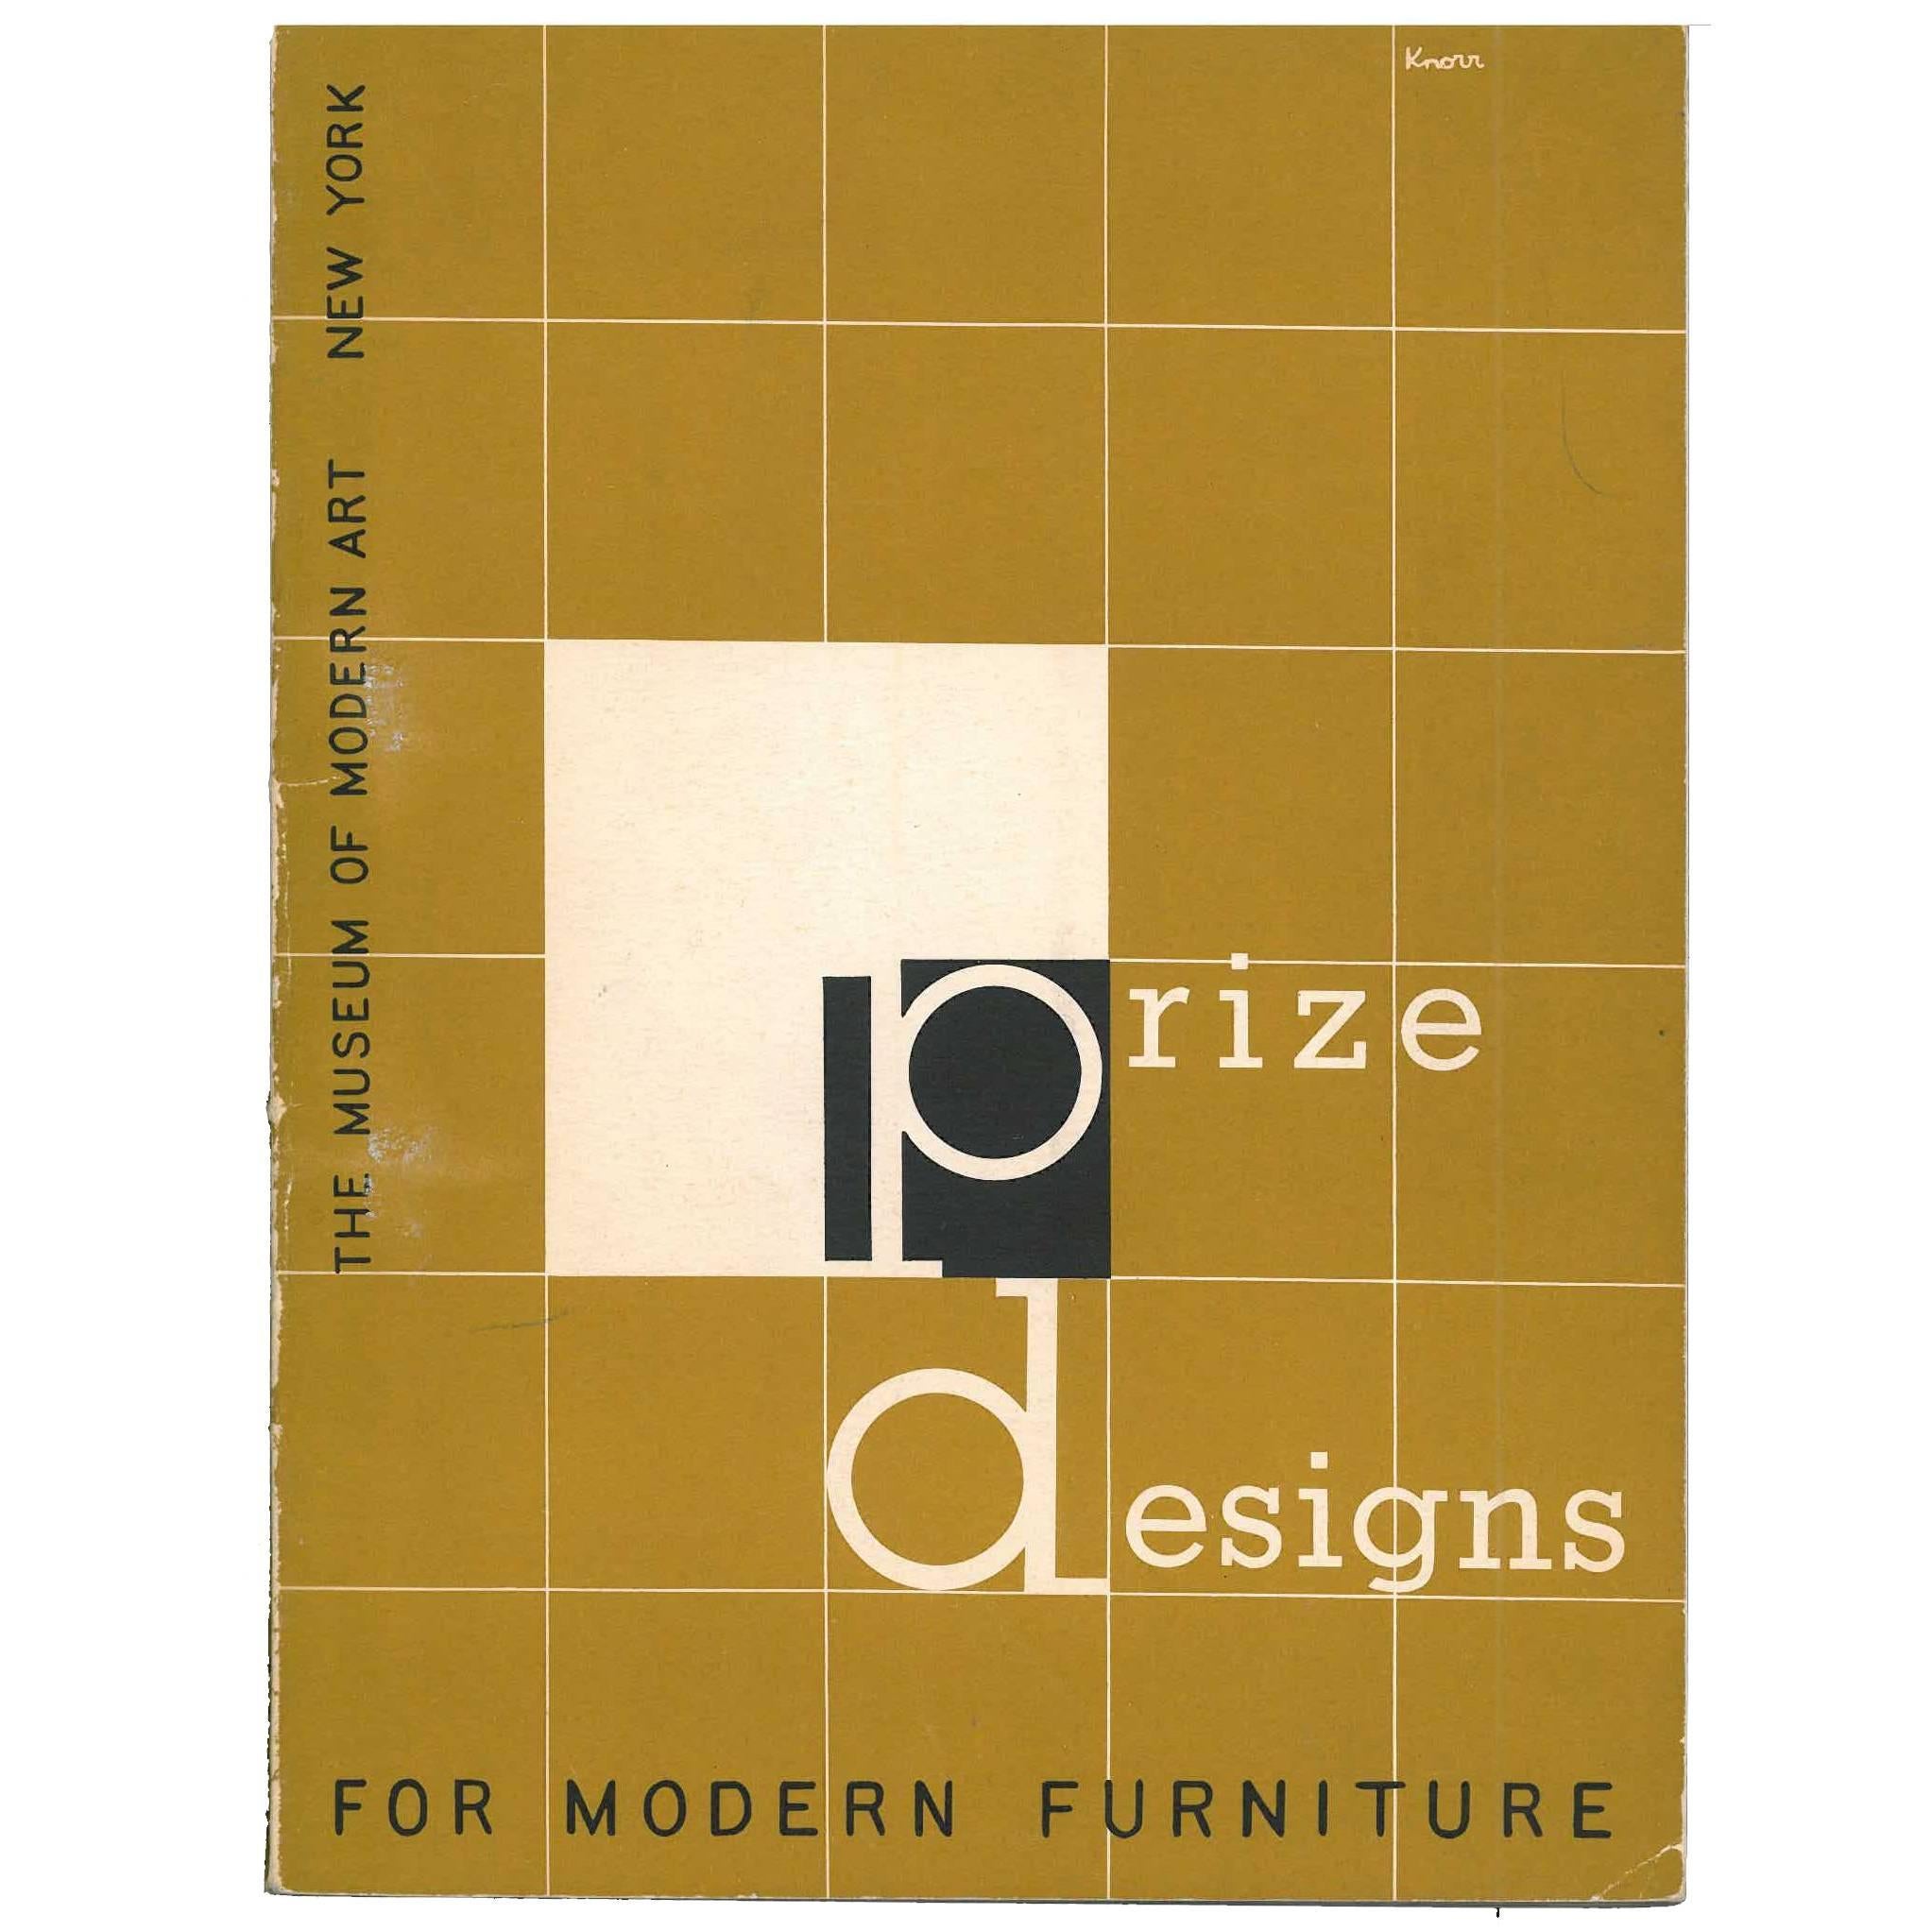 Prize Designs for Modern Furniture, Book